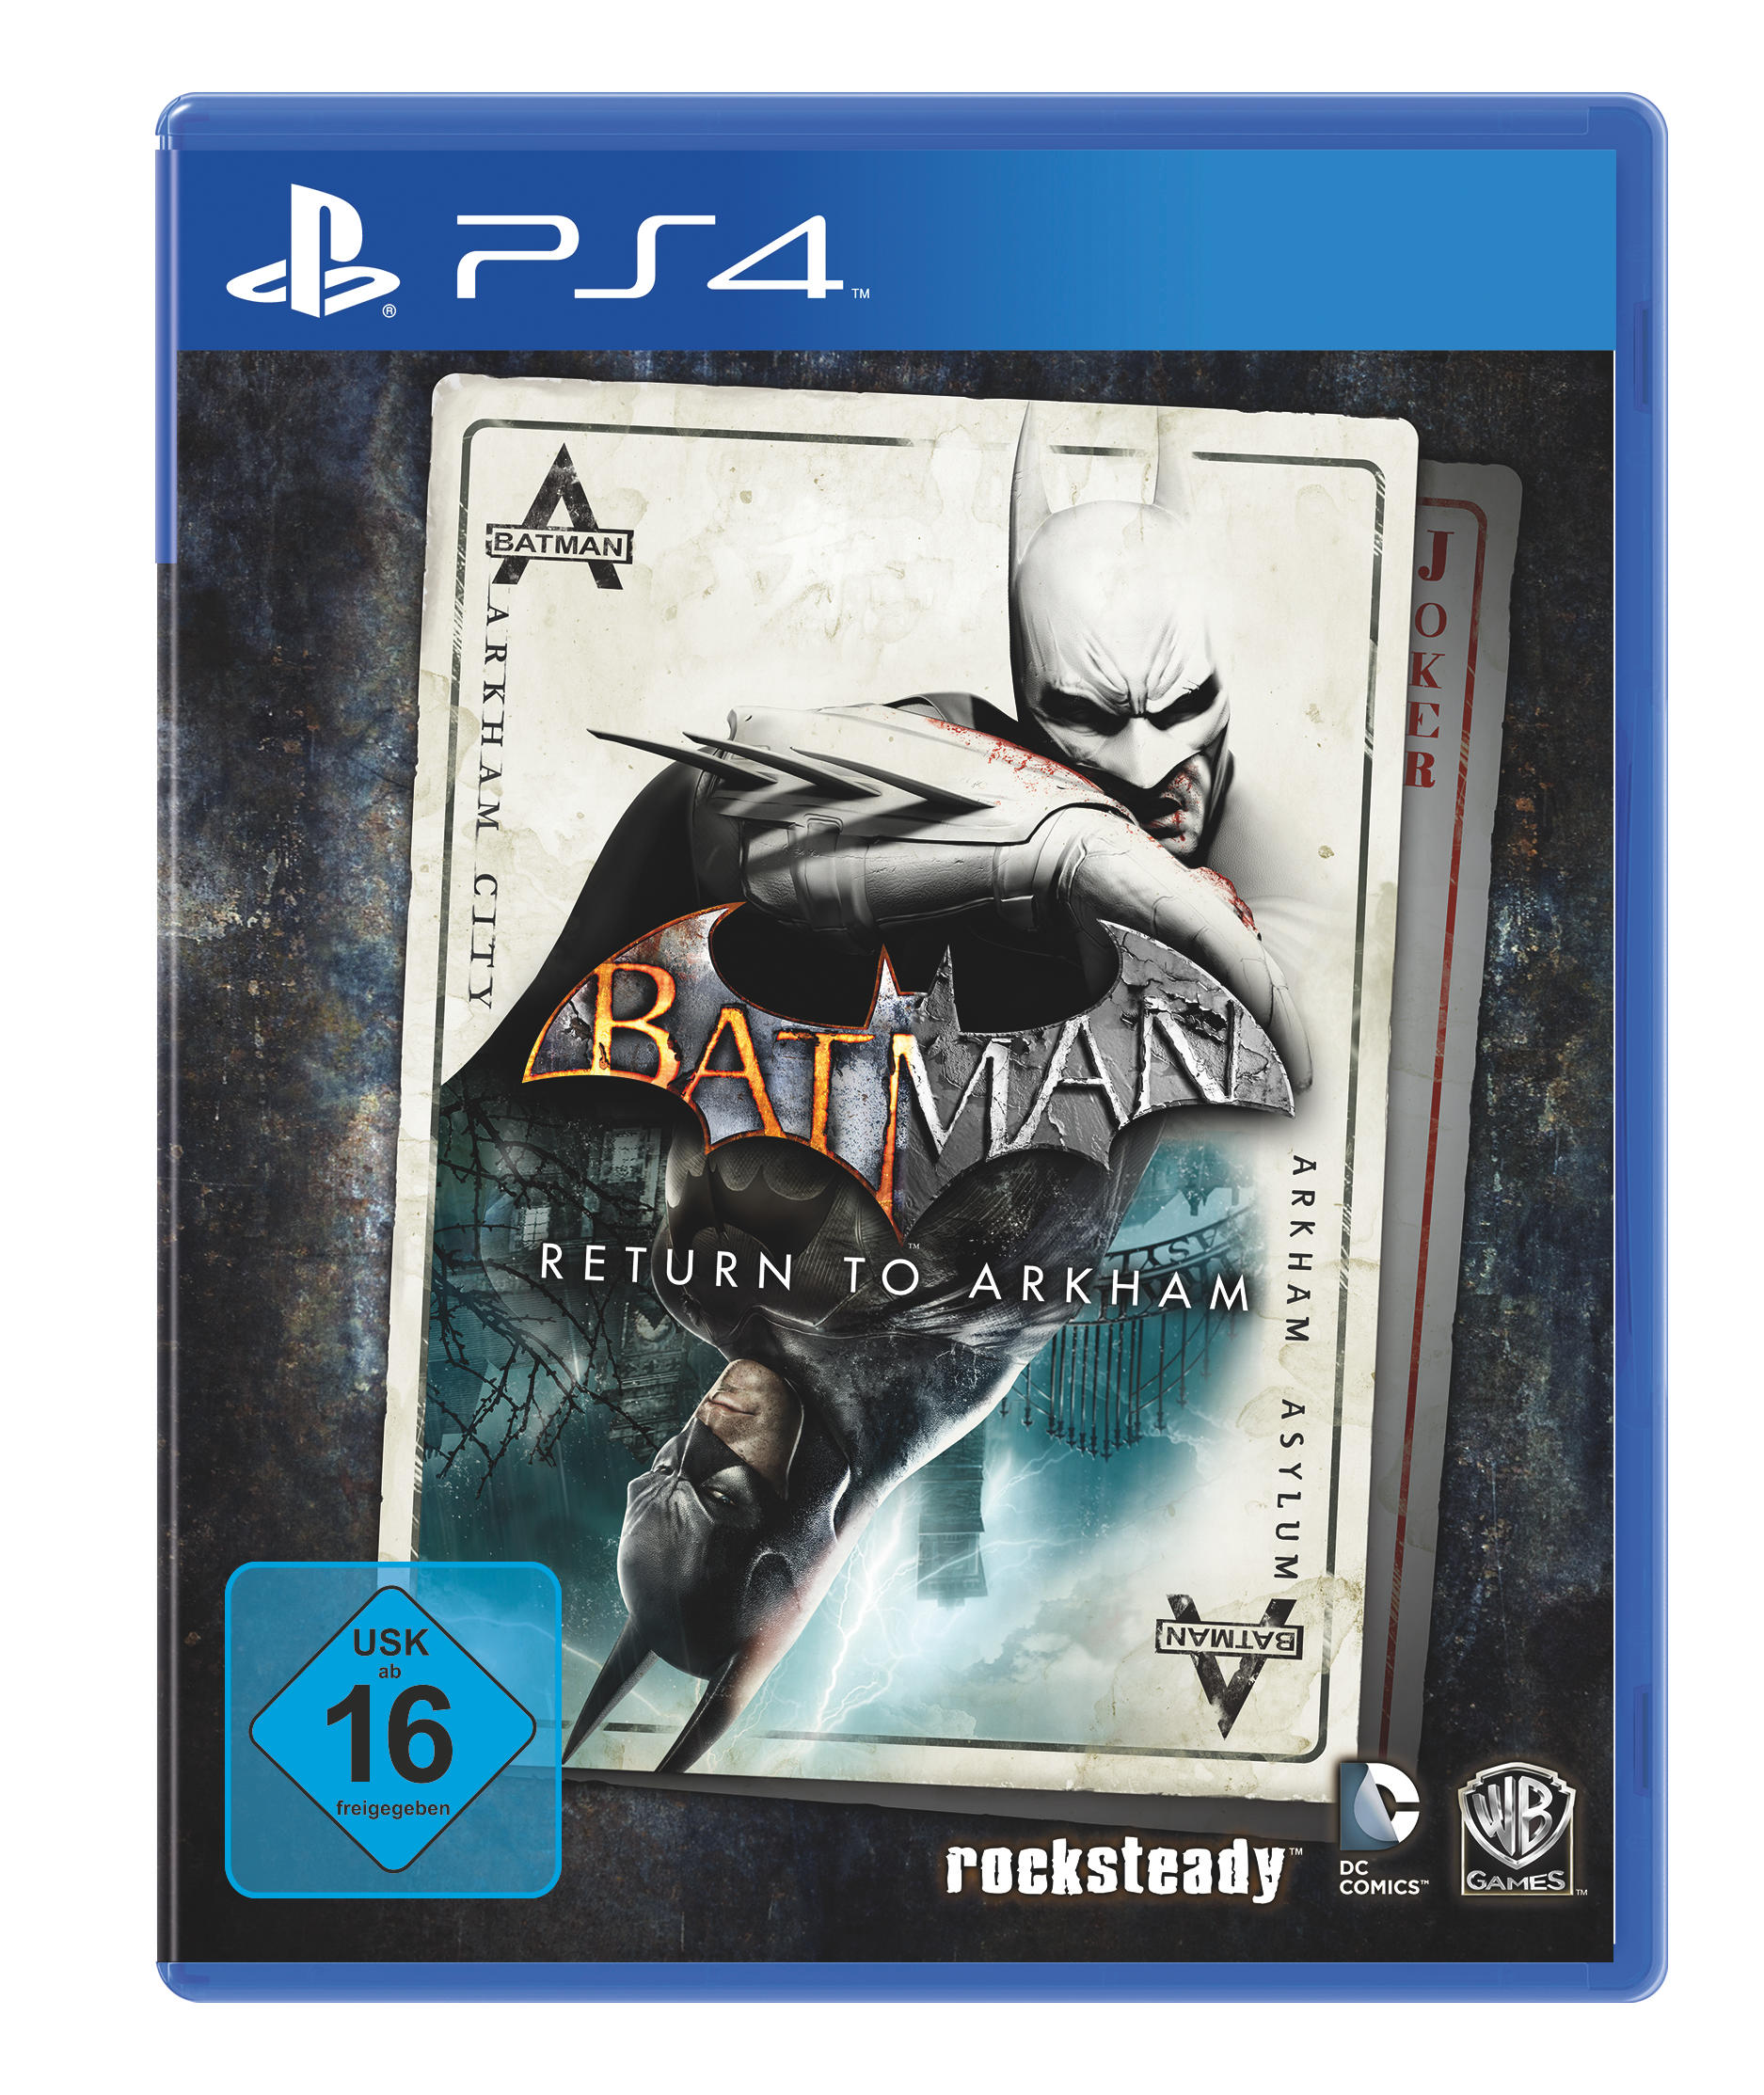 Batman: Return to - 4] Arkham [PlayStation